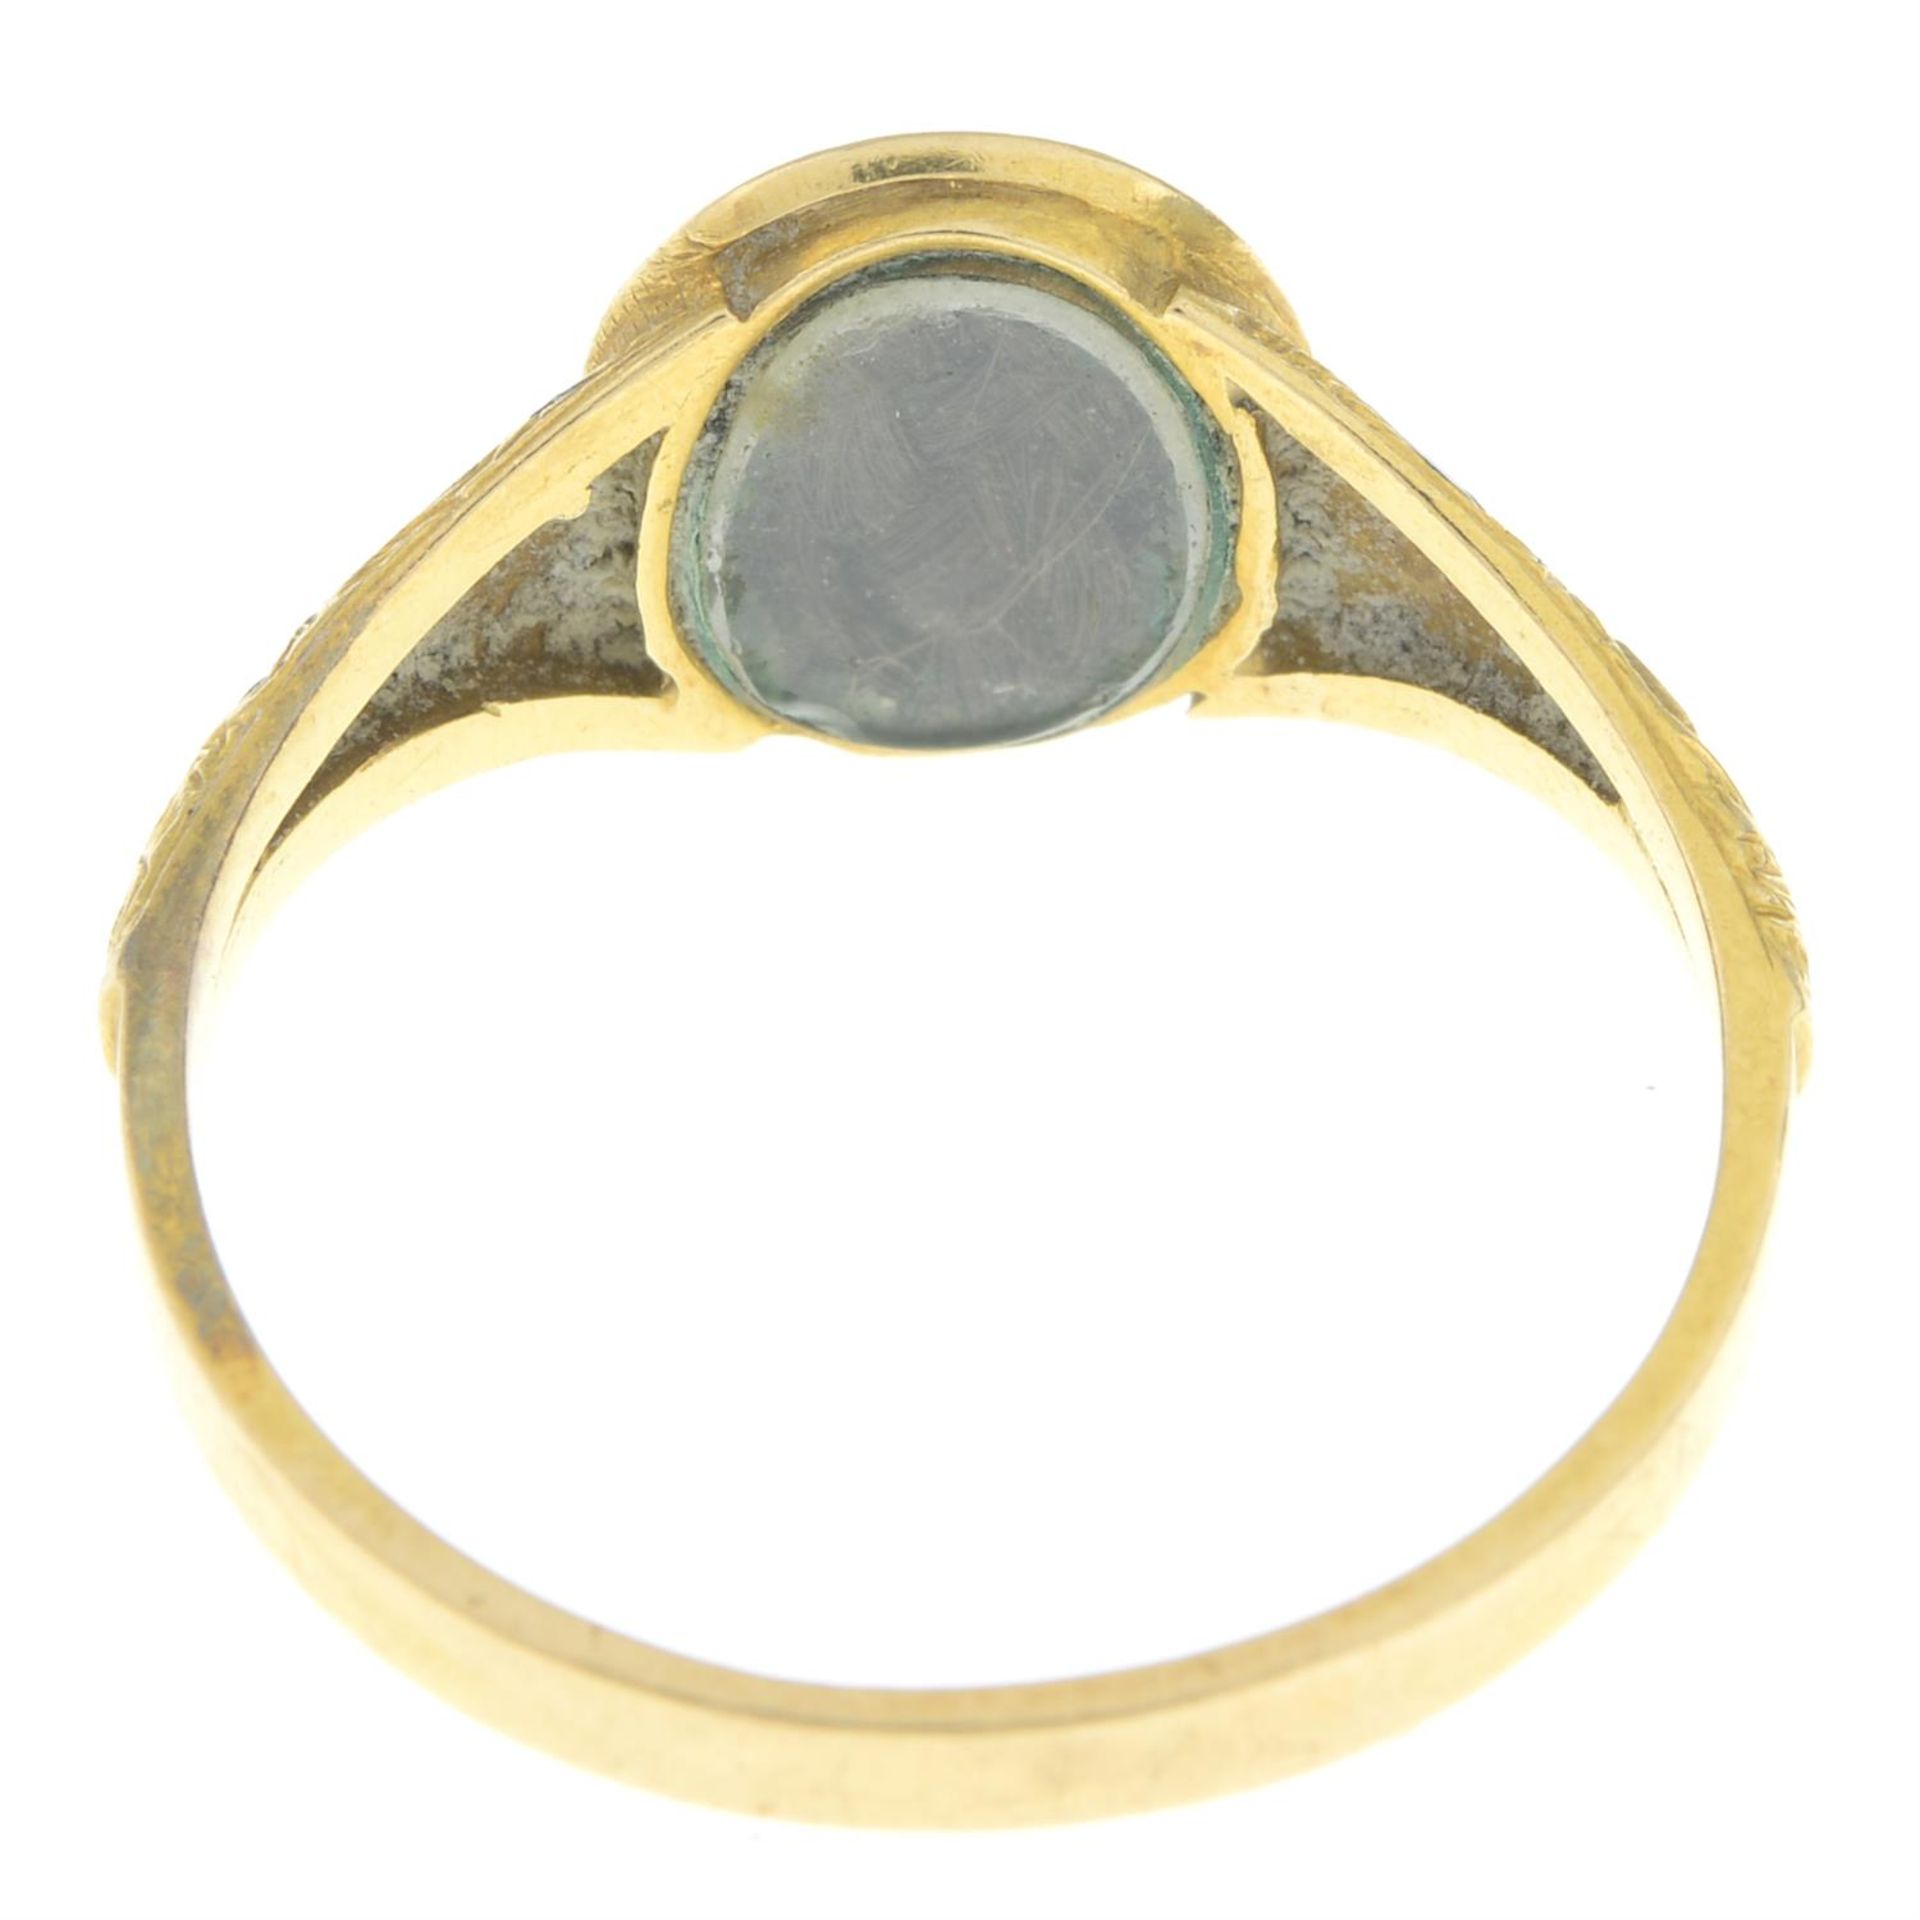 Victorian 18ct gold diamond & enamel mourning ring - Image 2 of 2